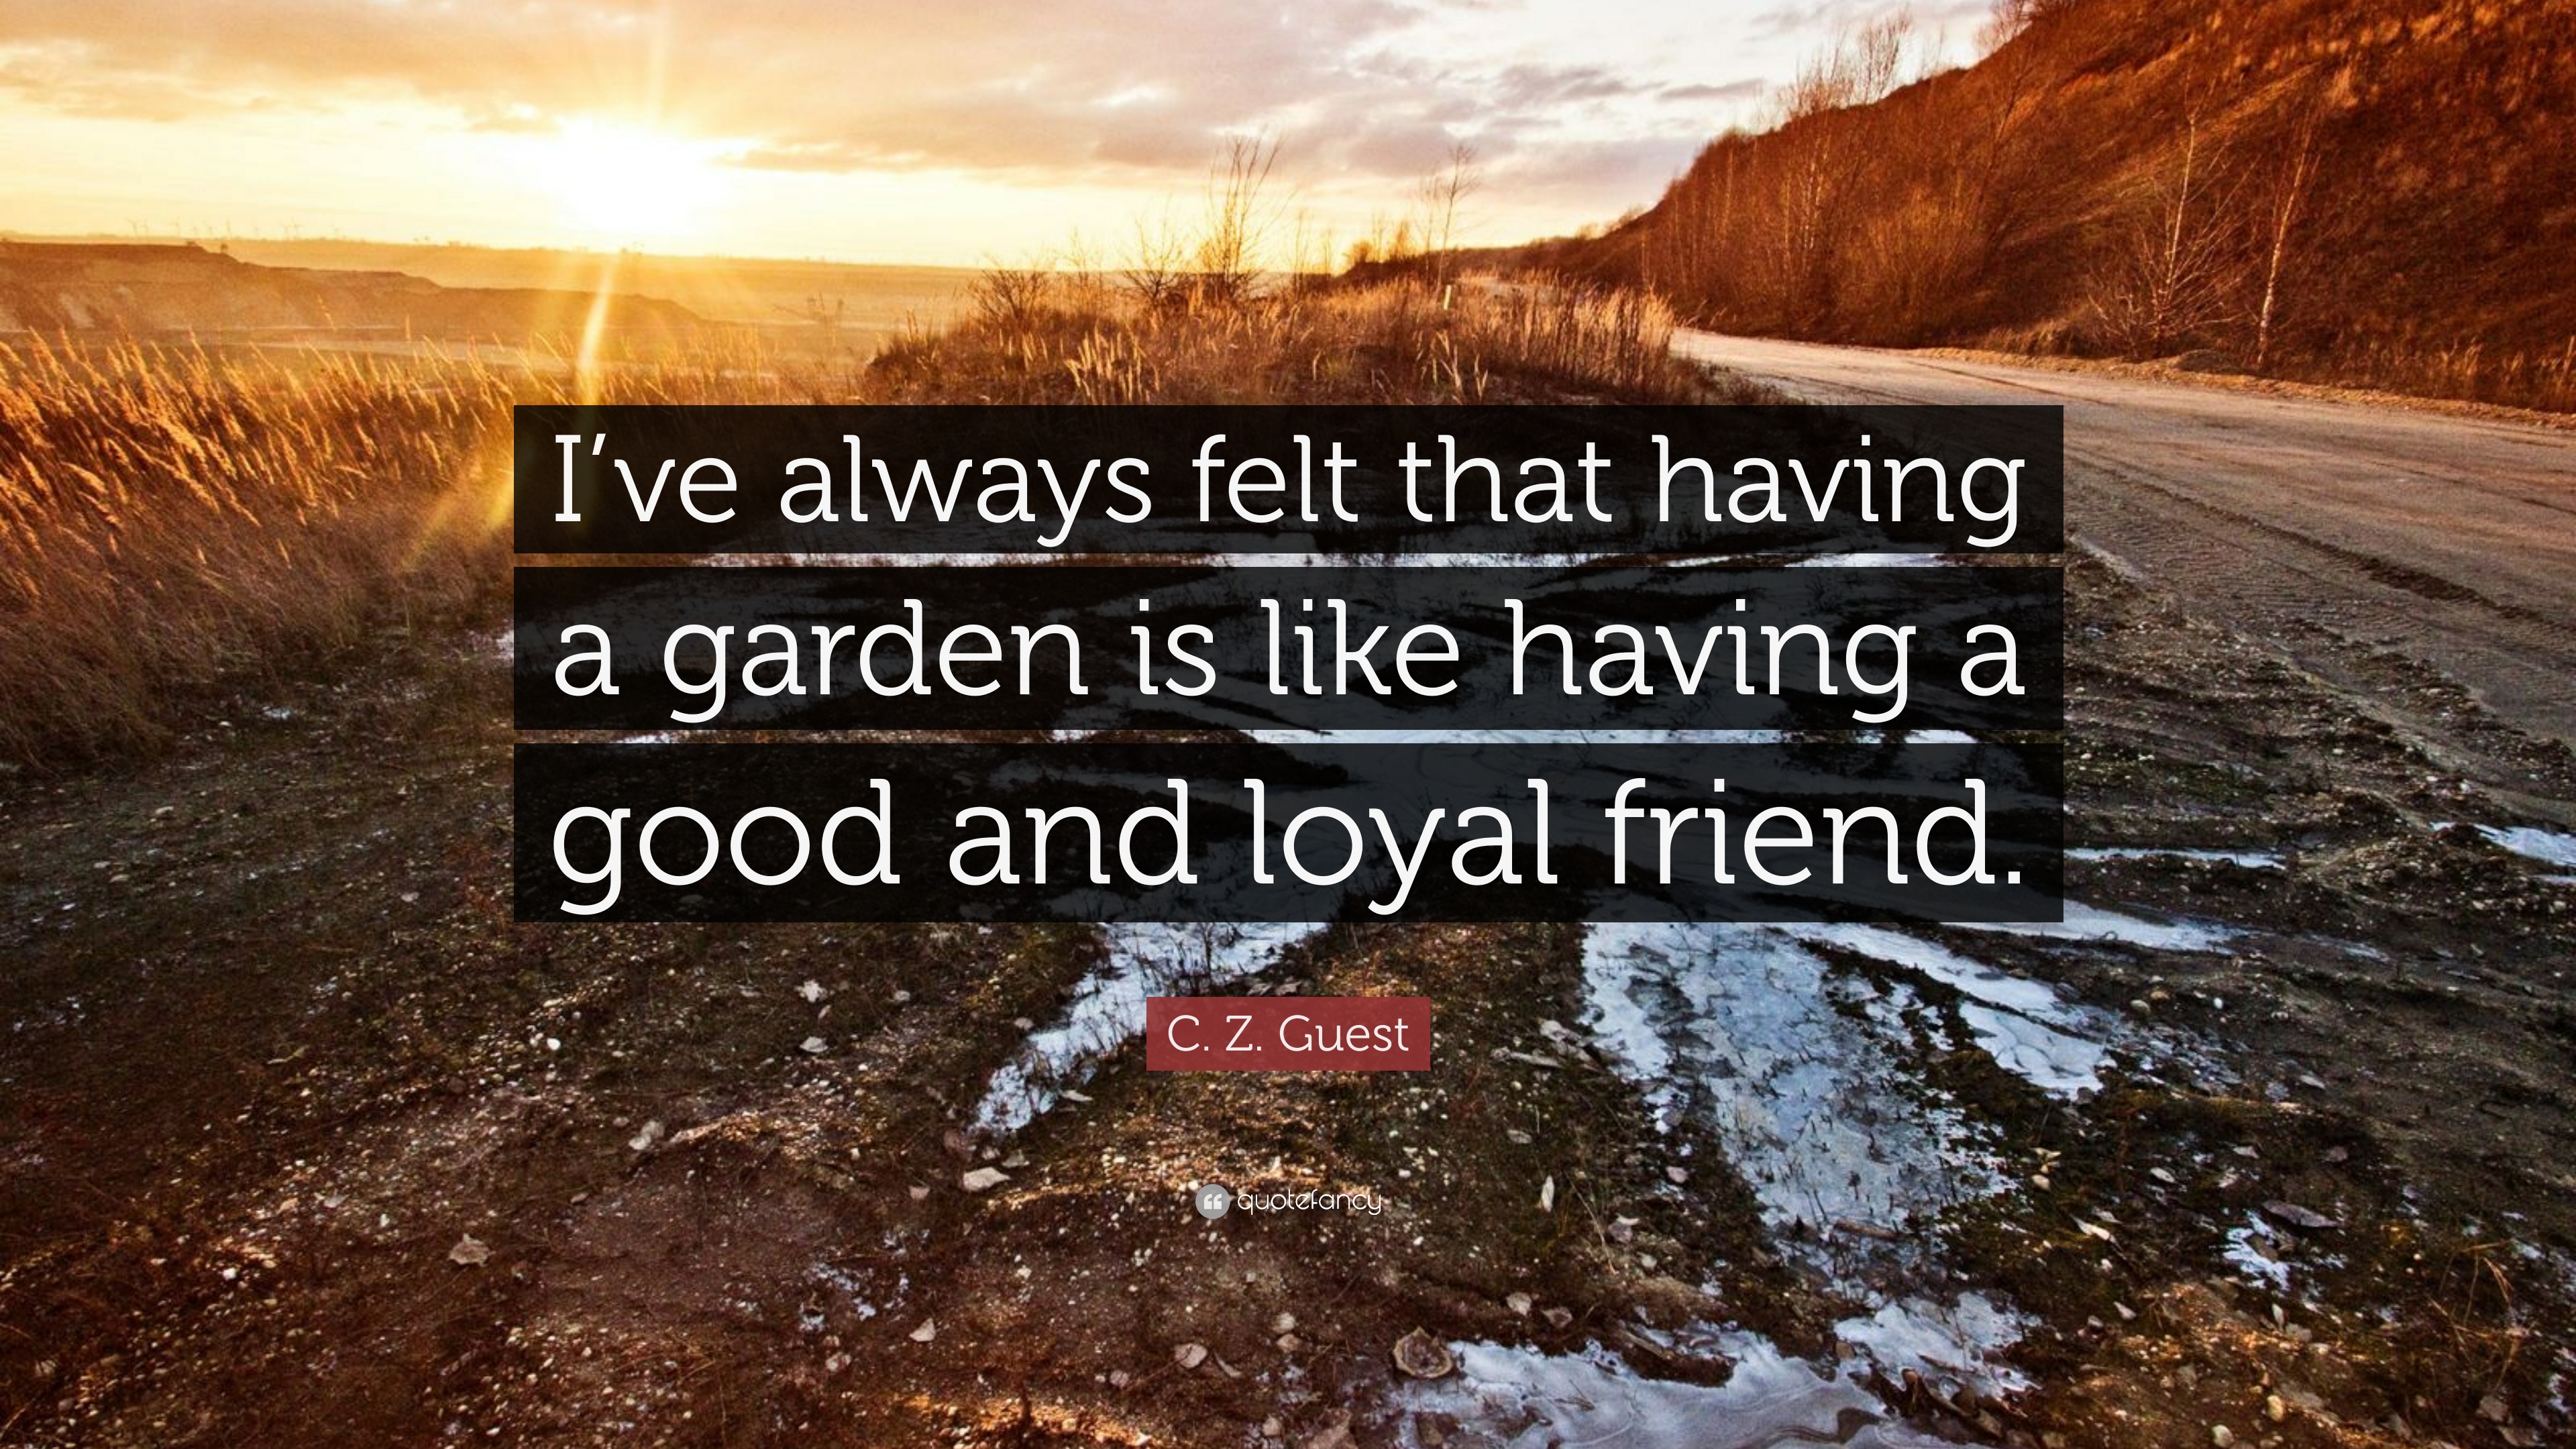 C. Z. Guest Quote: “I've always felt that having a garden is like ...